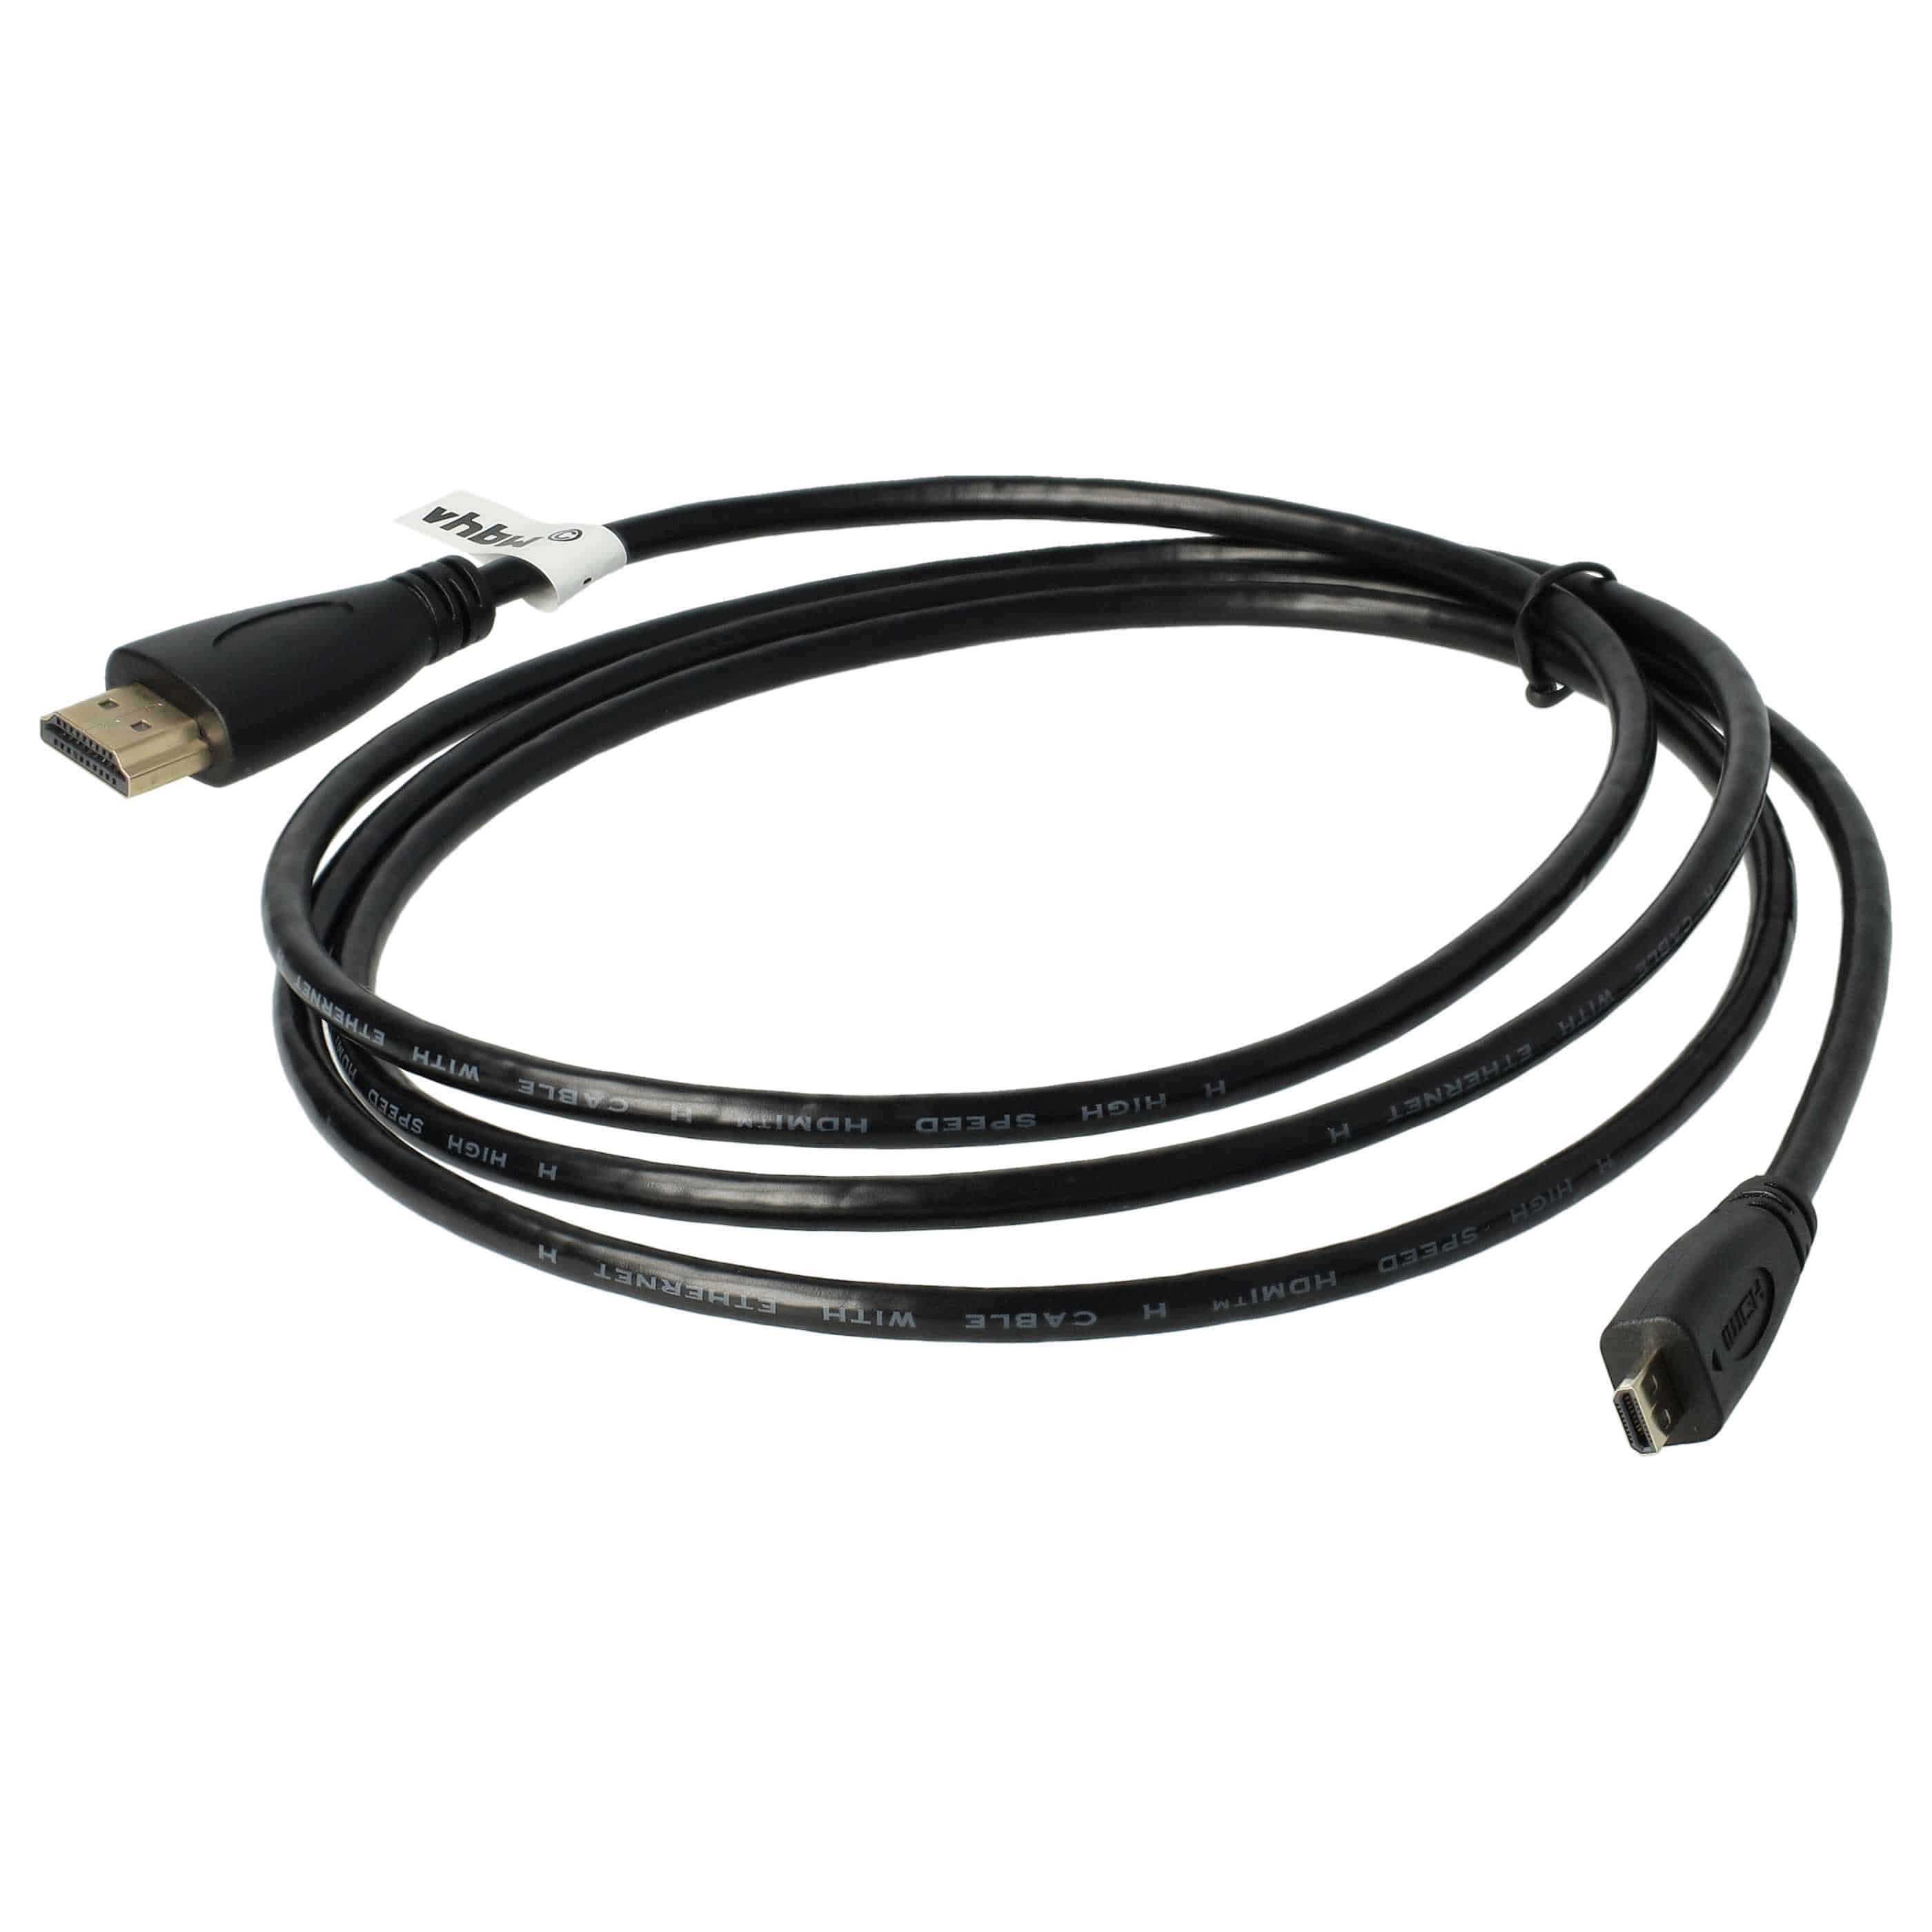 Câble HDMI, Micro-HDMI vers HDMI 1.4 1,4m pour Tablette, Smartphone, appareil photo